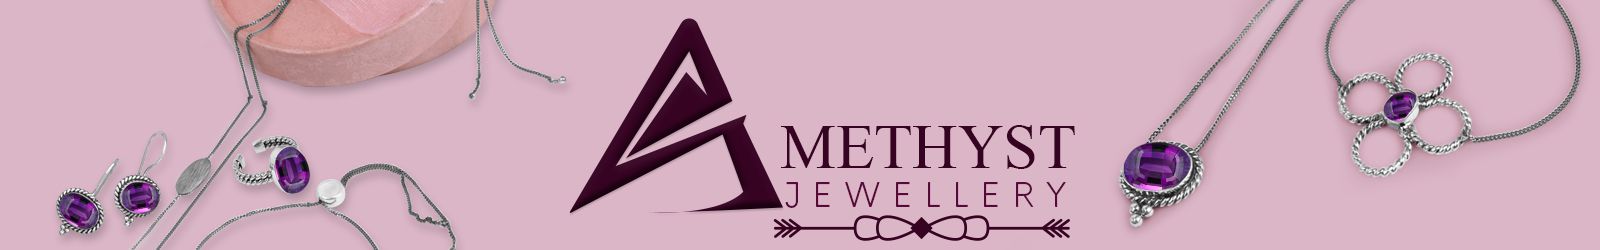 Silver Amethyst Jewelry Wholesale Supplier